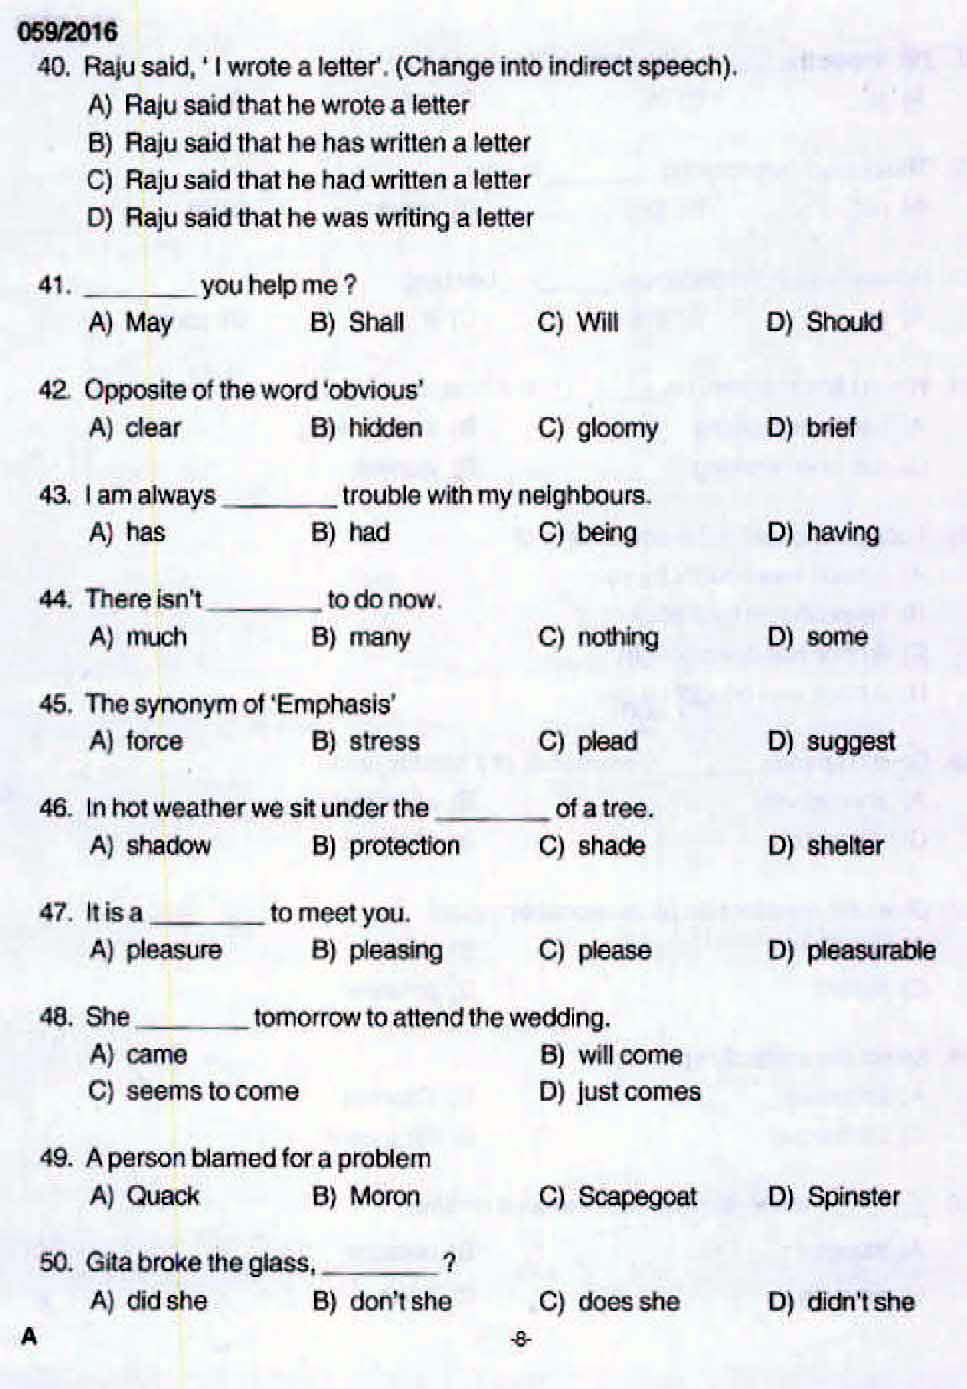 Kerala LD Typist Exam 2016 Question Paper Code 0592016 6